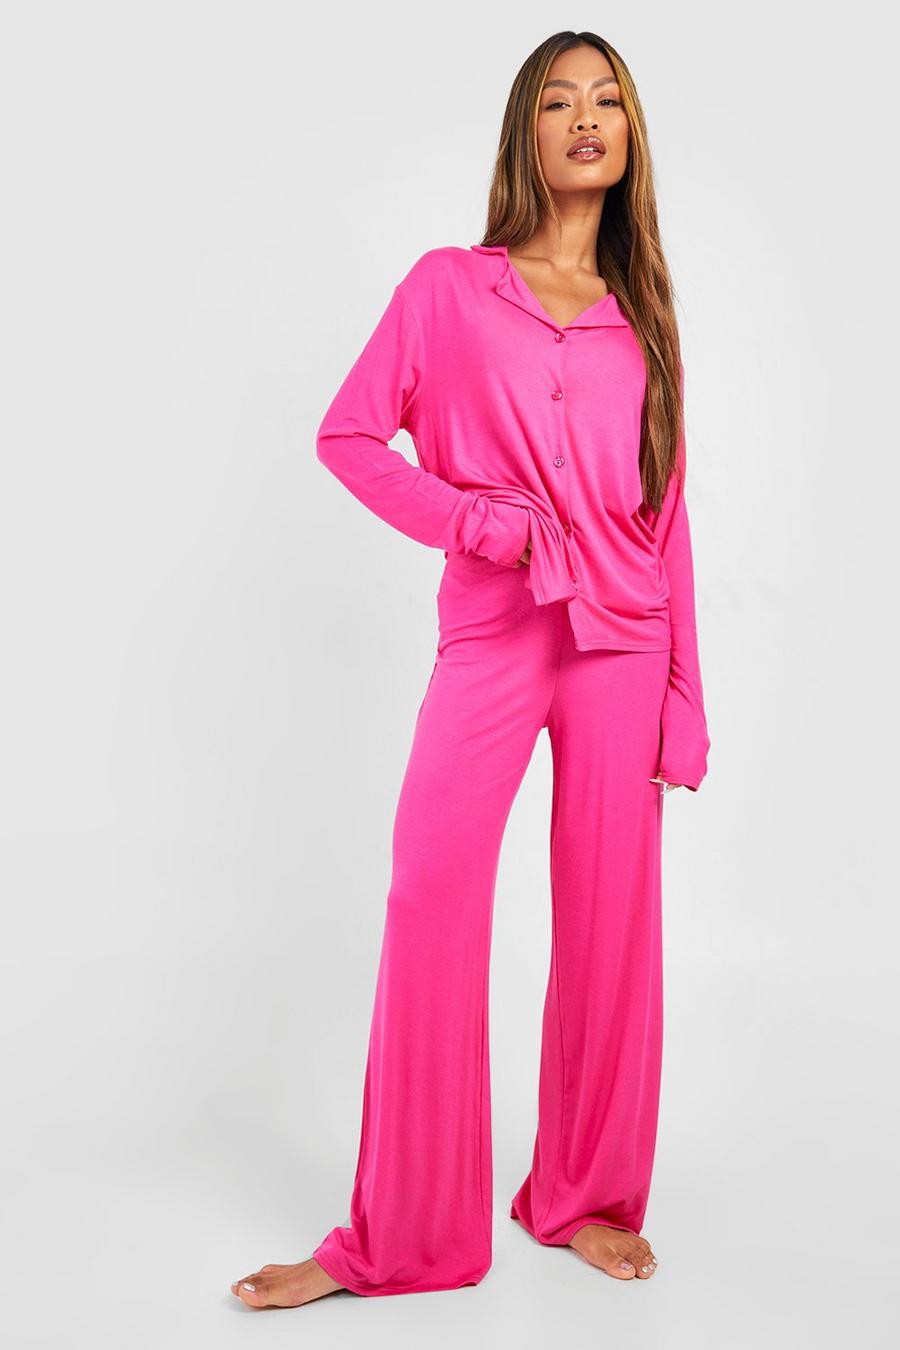 Pantalon de pyjama large en jersey, Hot pink rose